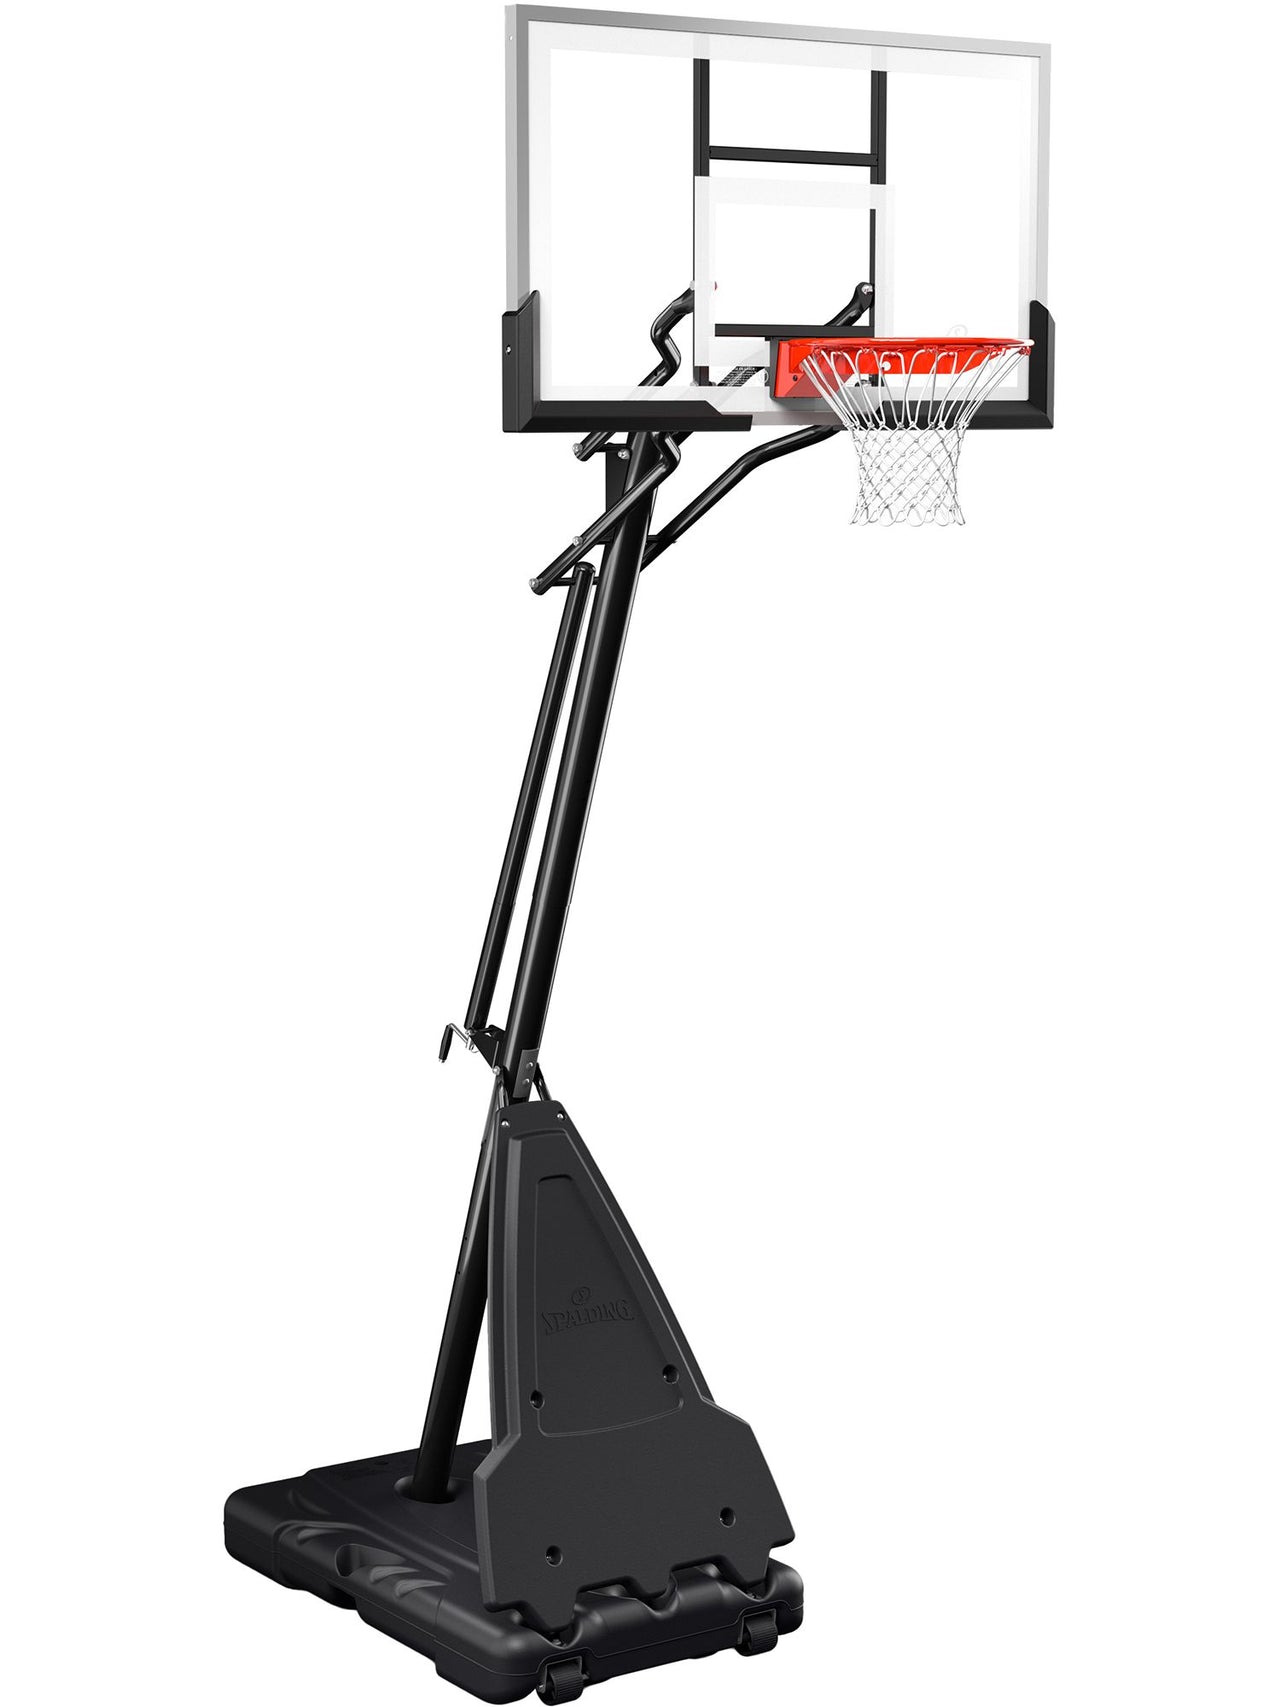 Spalding 60" Performance Acrylic Screw Jack Portable Basketball Hoop